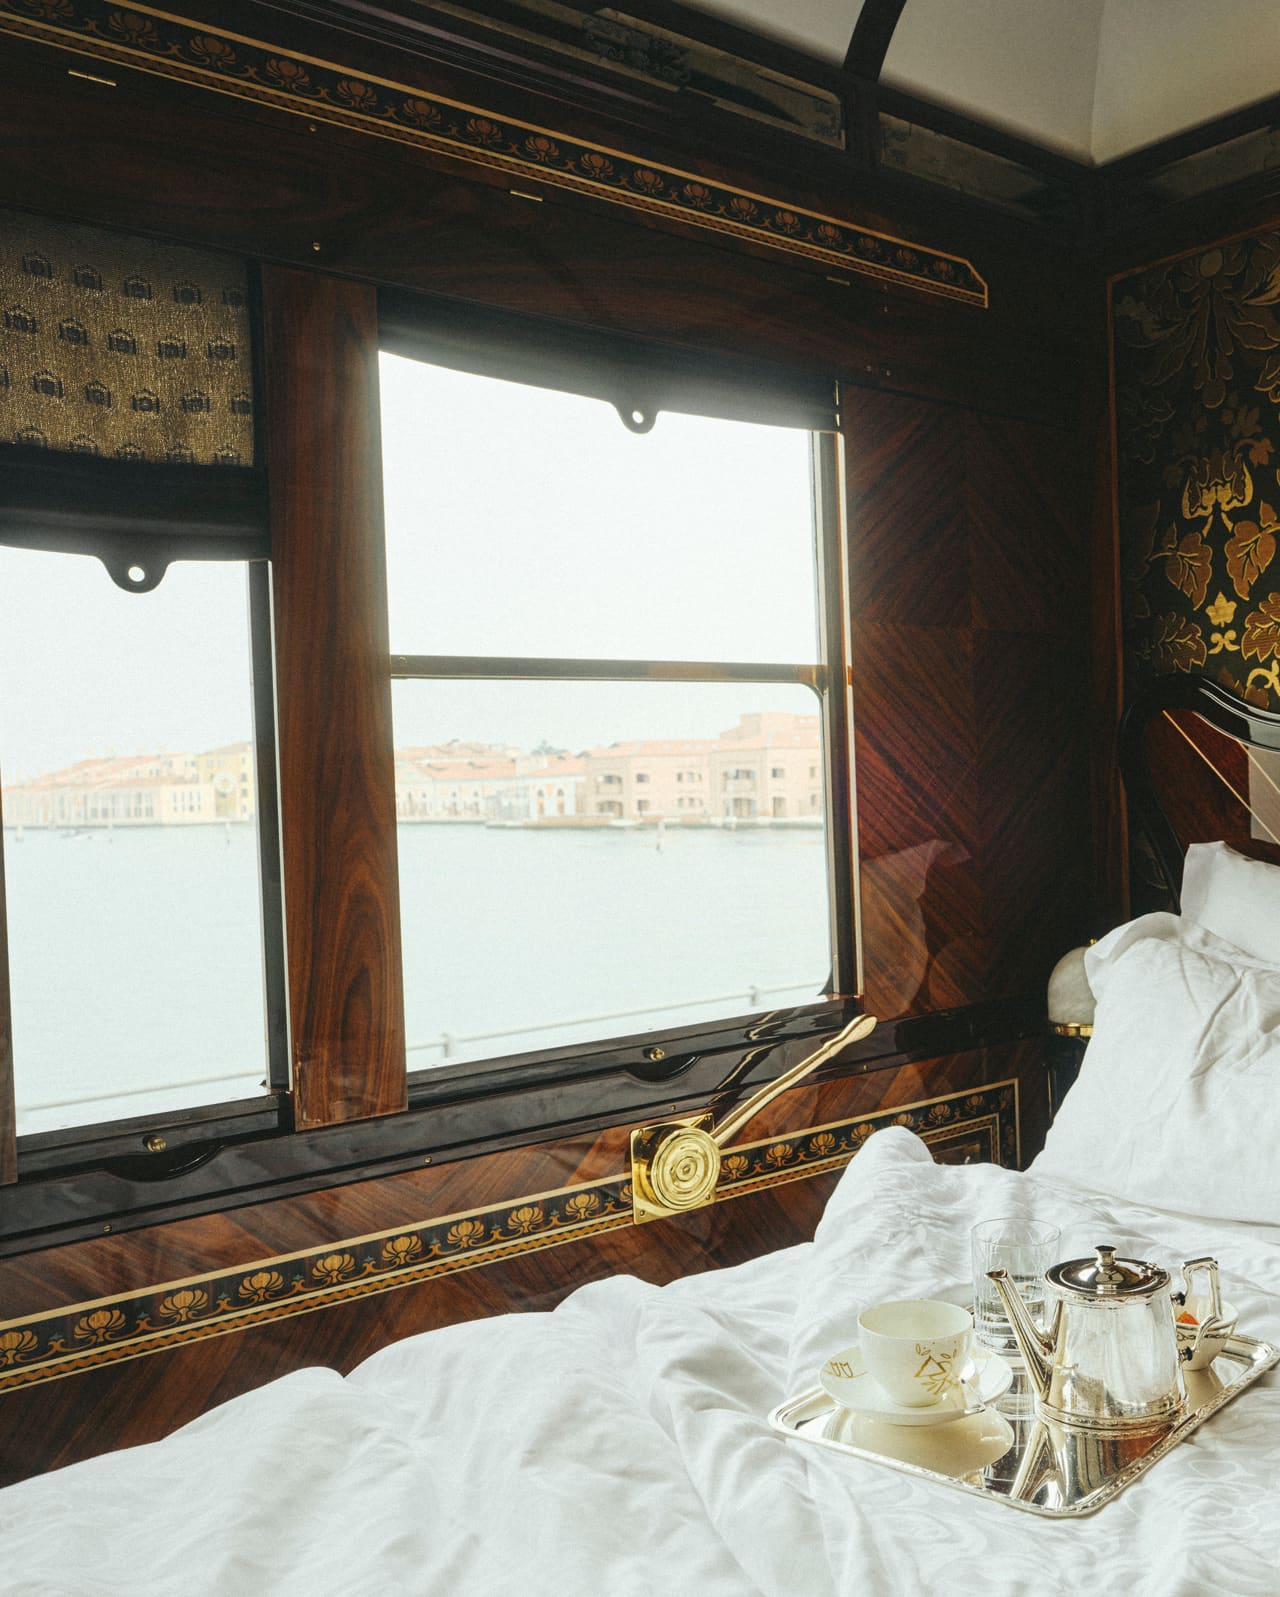 Venice Simplon Orient Express: Luxury Train Journeys